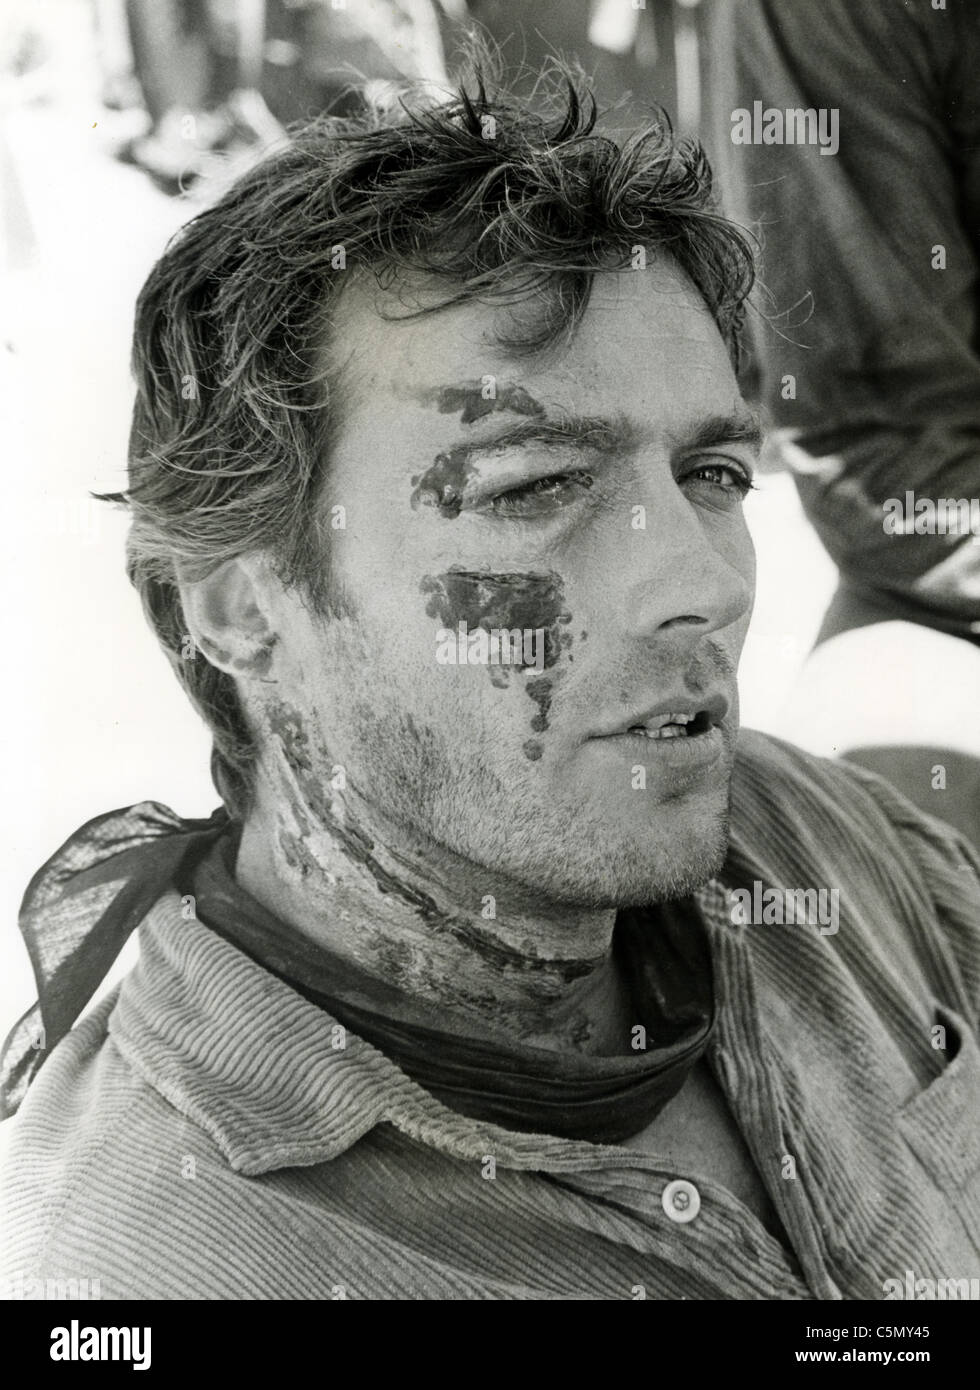 CLINT EASTWOOD in Make-up für die 1968 Film "Hang em High". Foto J Barry Herron Stockfoto